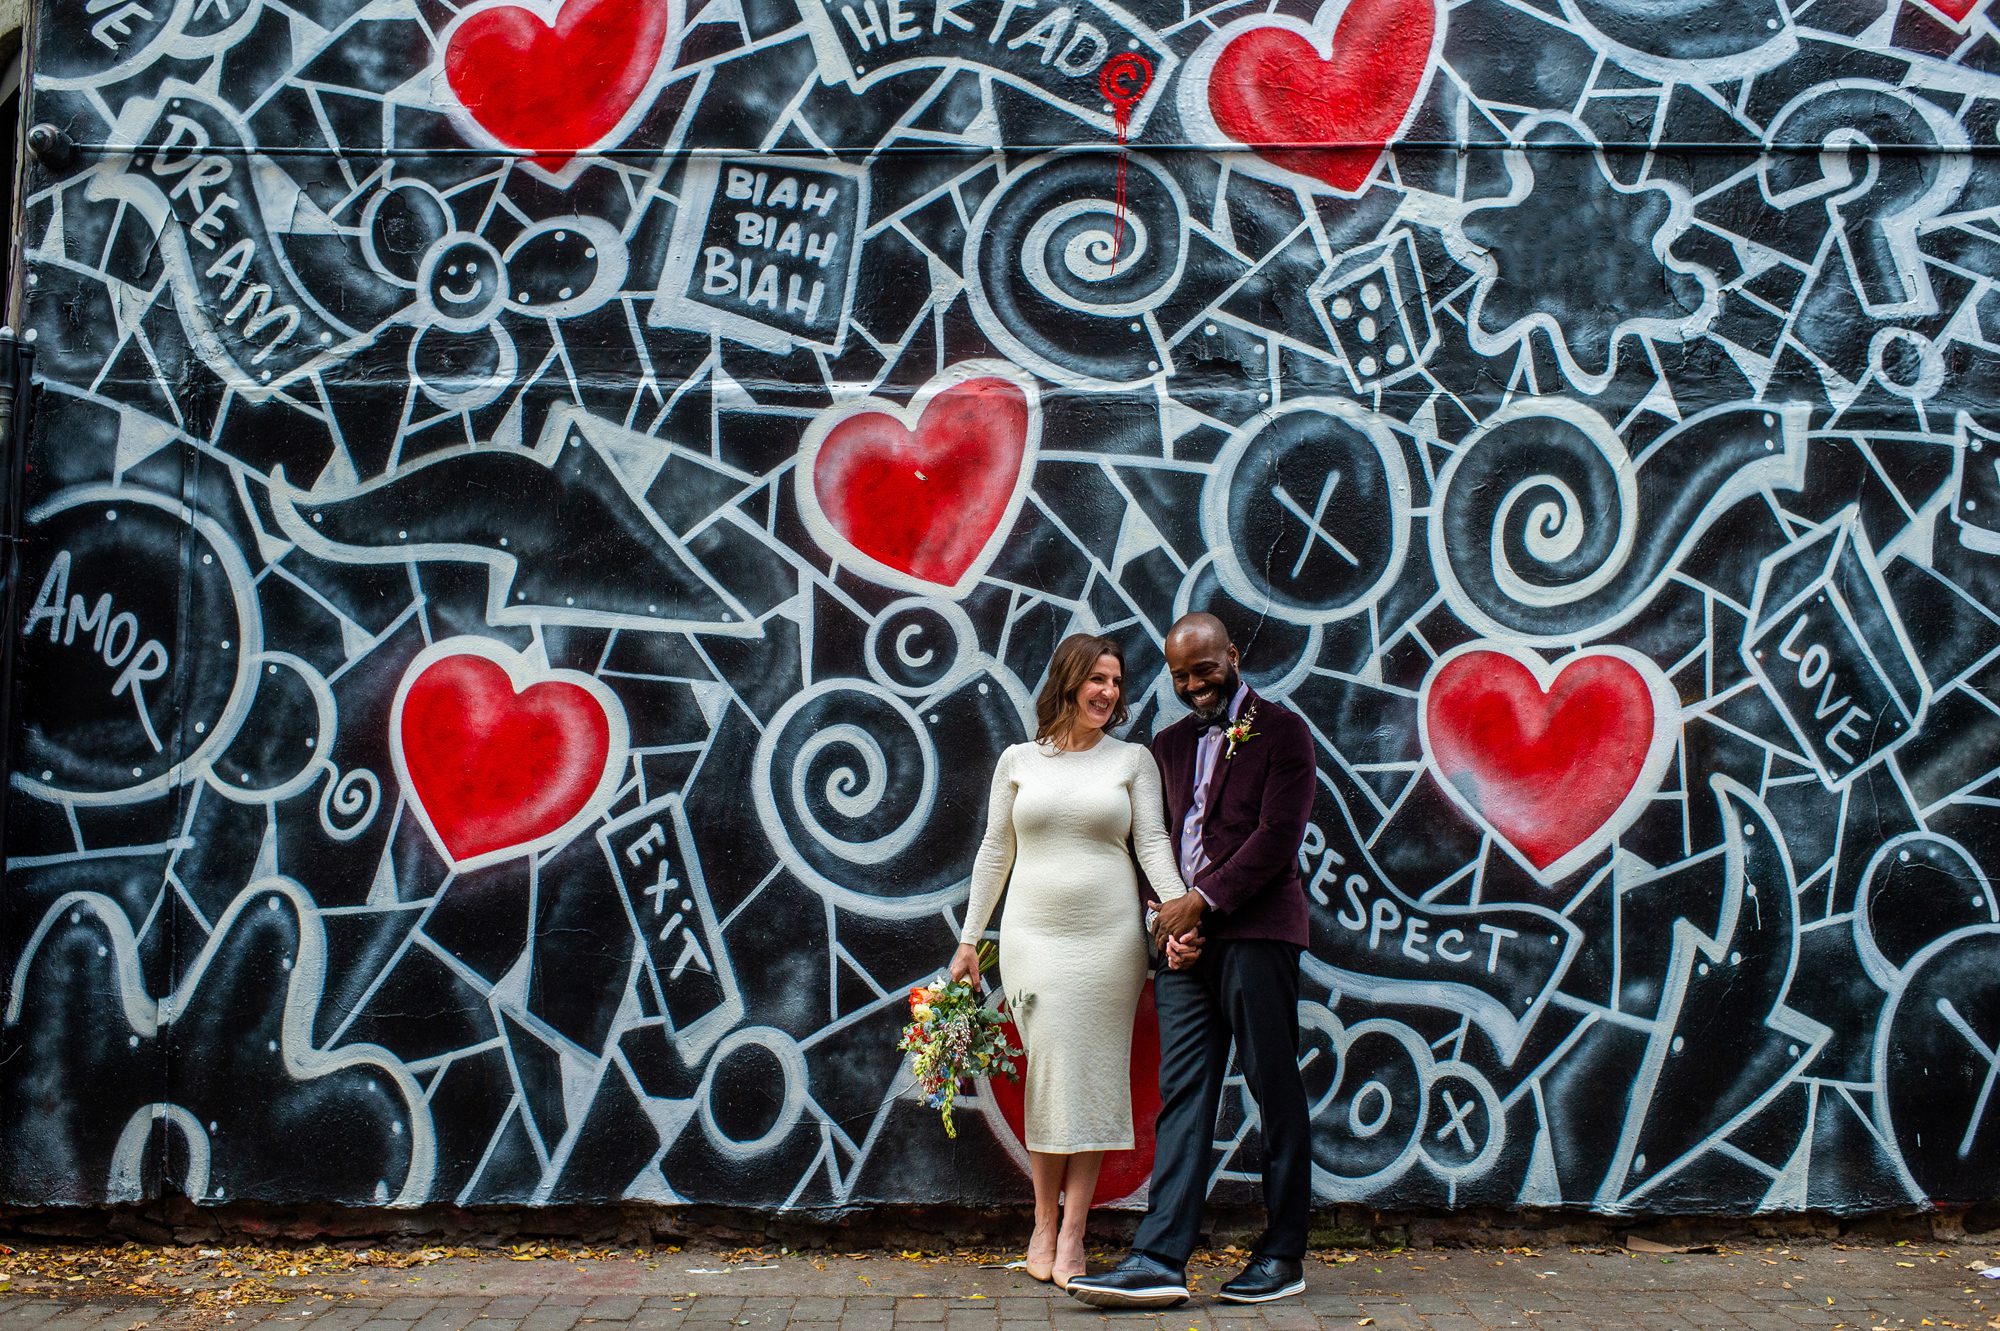 Wedding Photos with Street Art